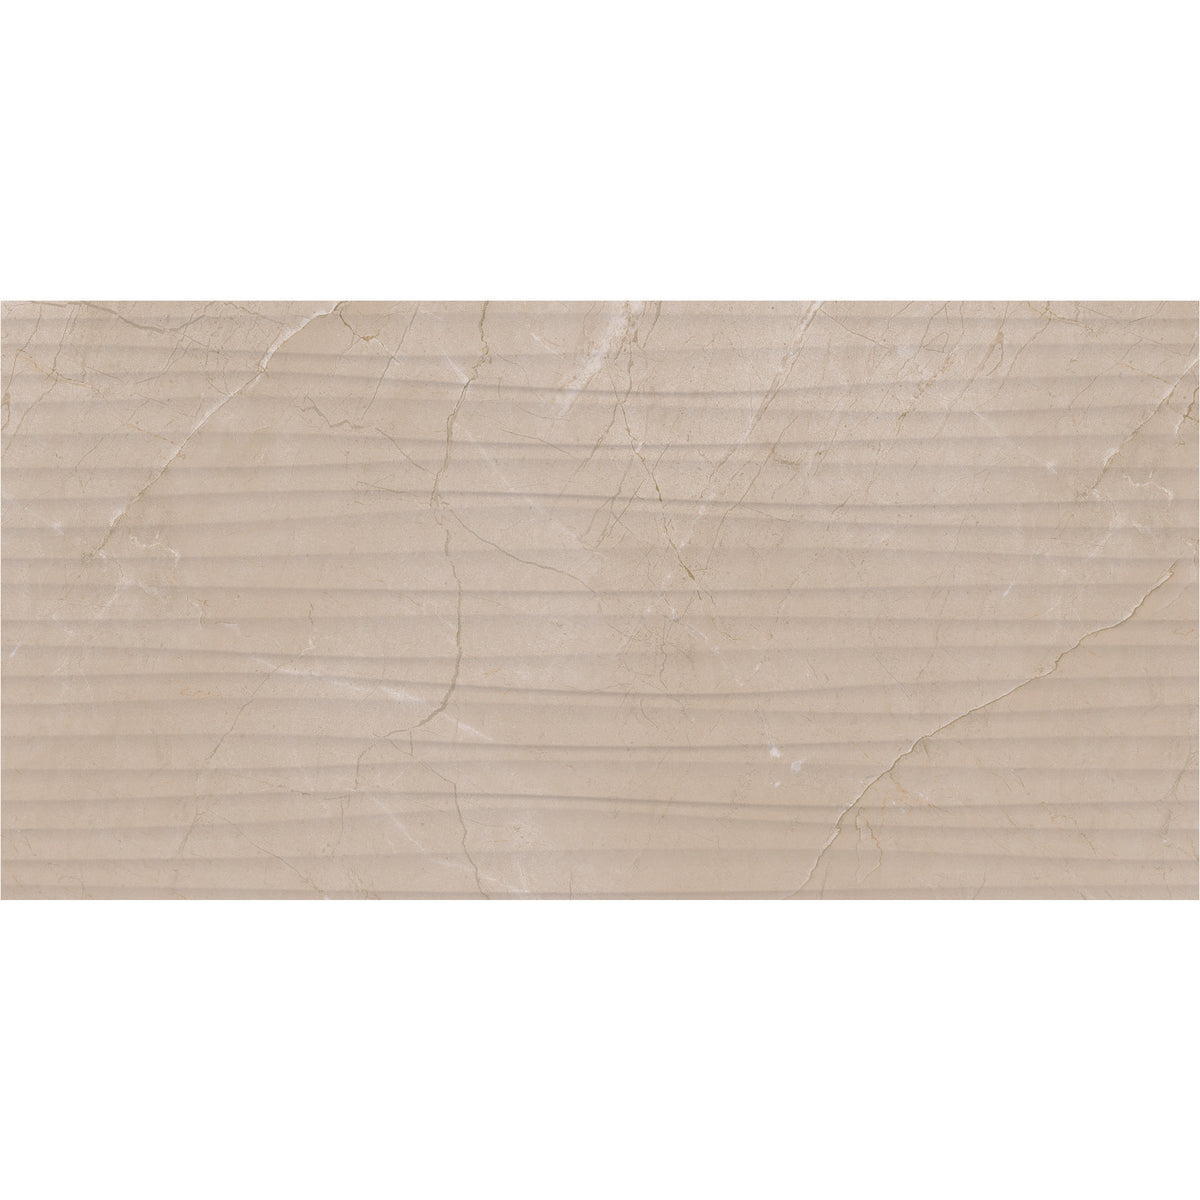 Daltile - Perpetuo - 12 in. x 24 in. Glazed Ceramic Wave Wall Tile - Elegant Beige